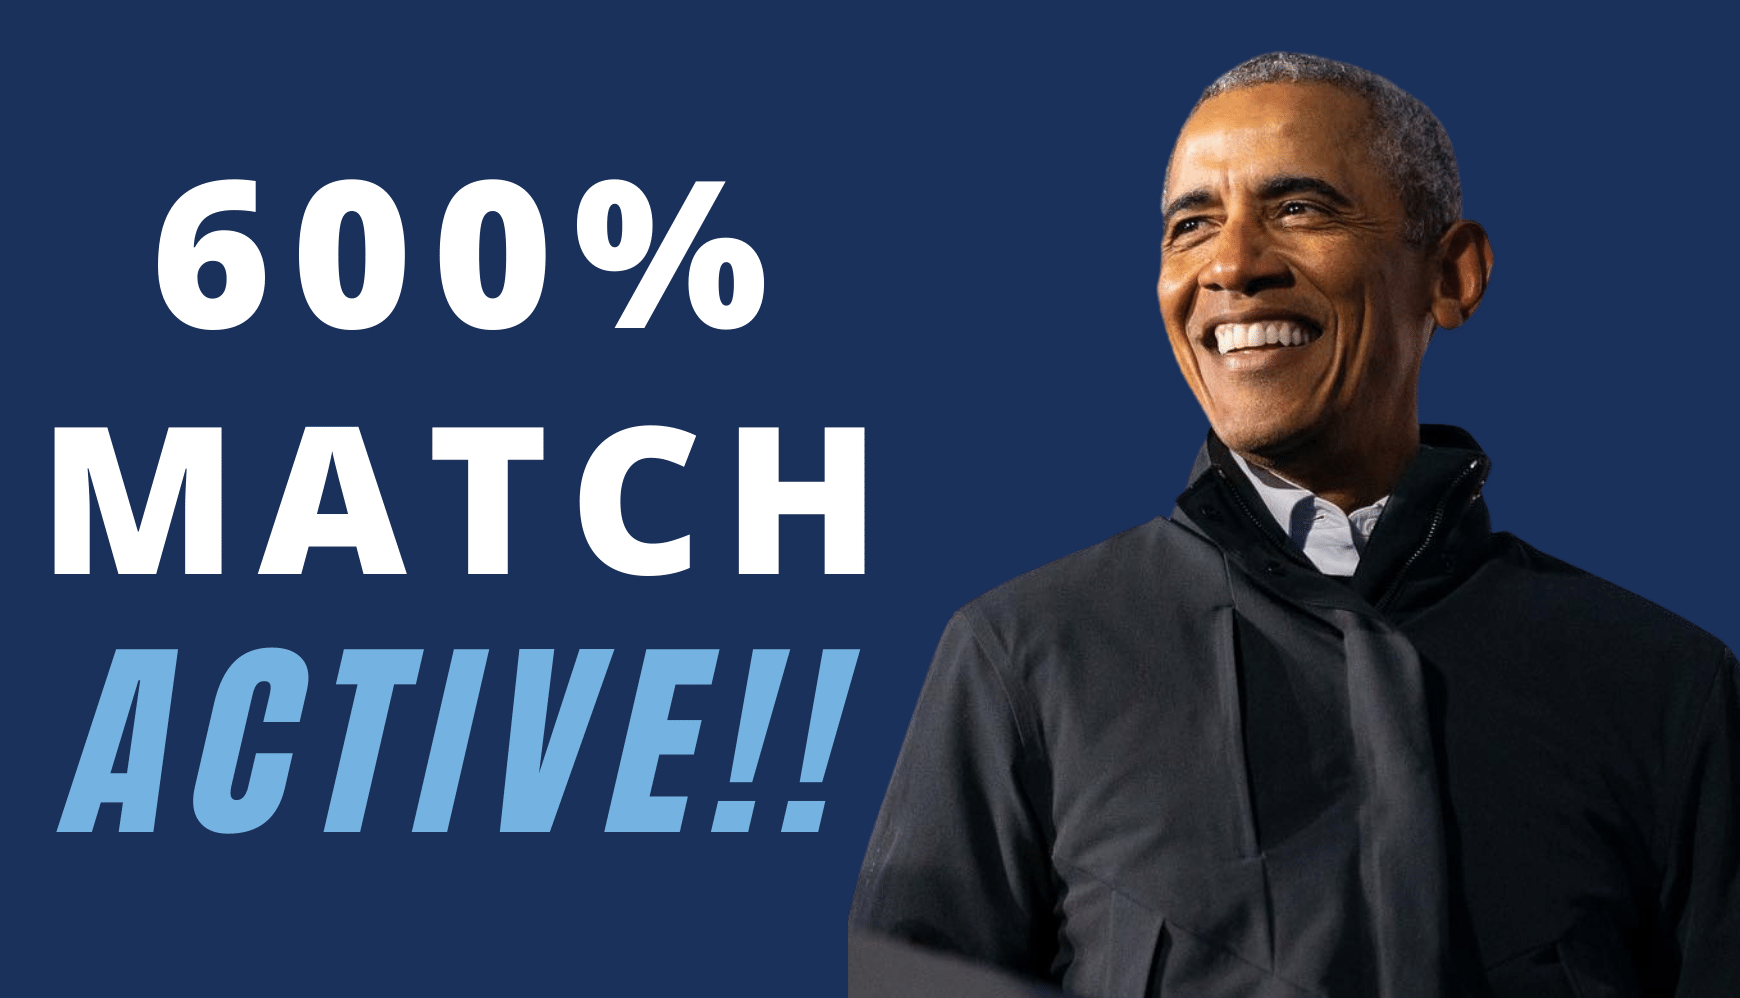 300% MATCH UNLOCKED. Help Joe Biden Win! Donate Now! 